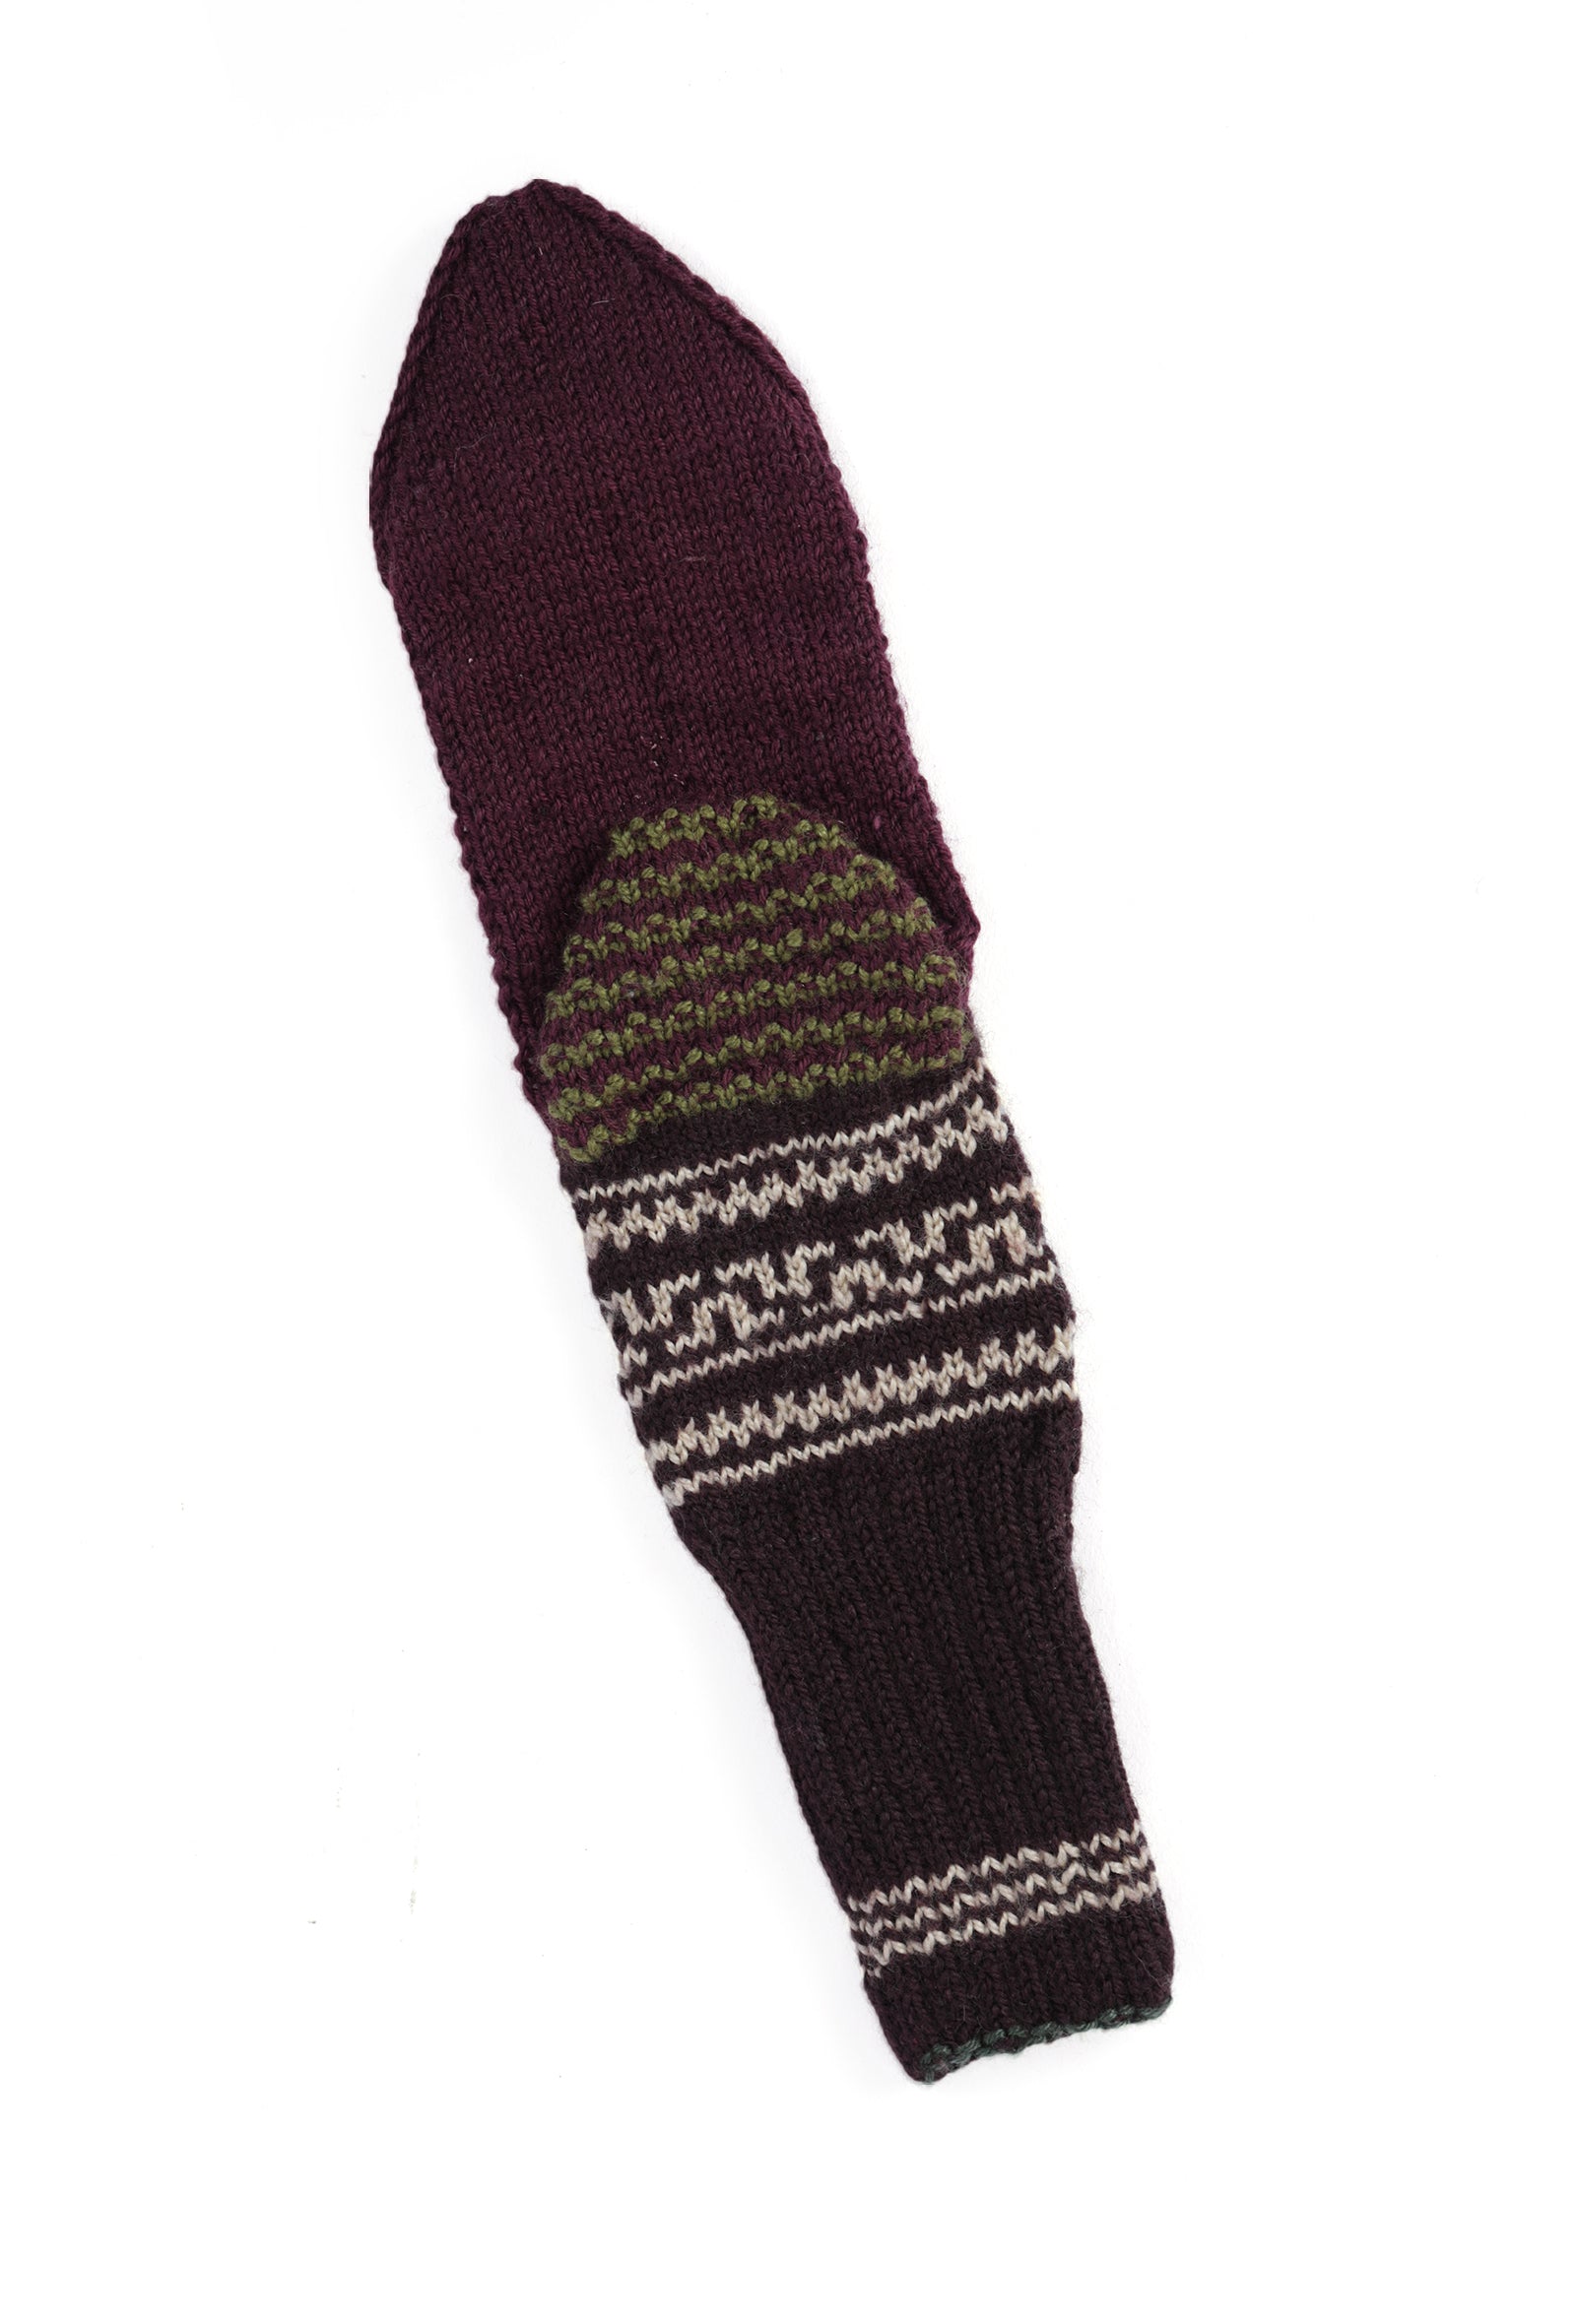 Brown & Multi Hand Knitted Woolen Winter Socks